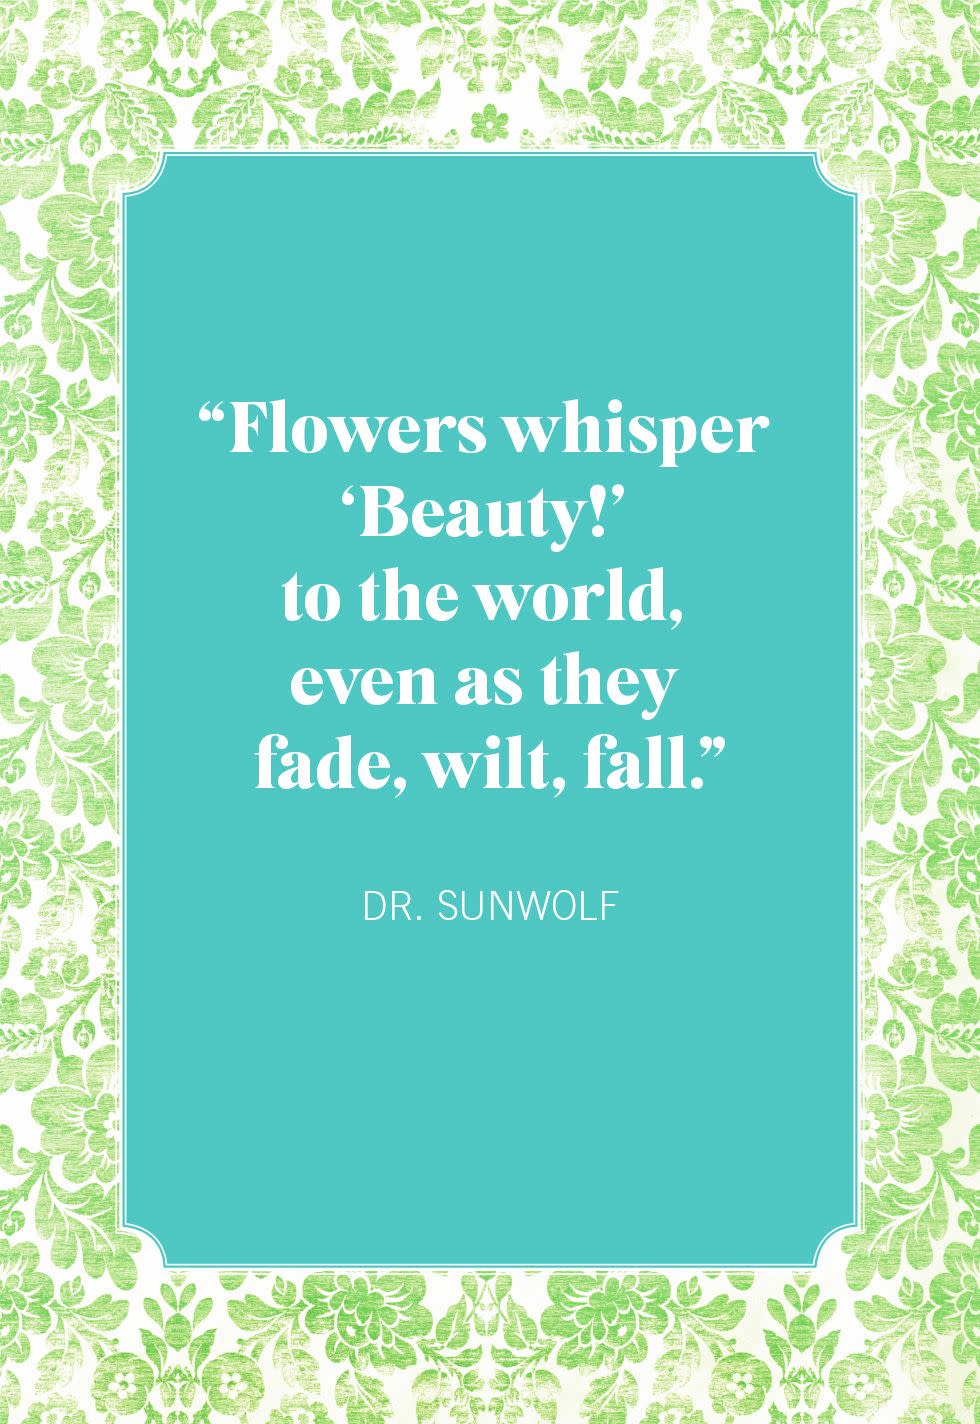 best flower quotes